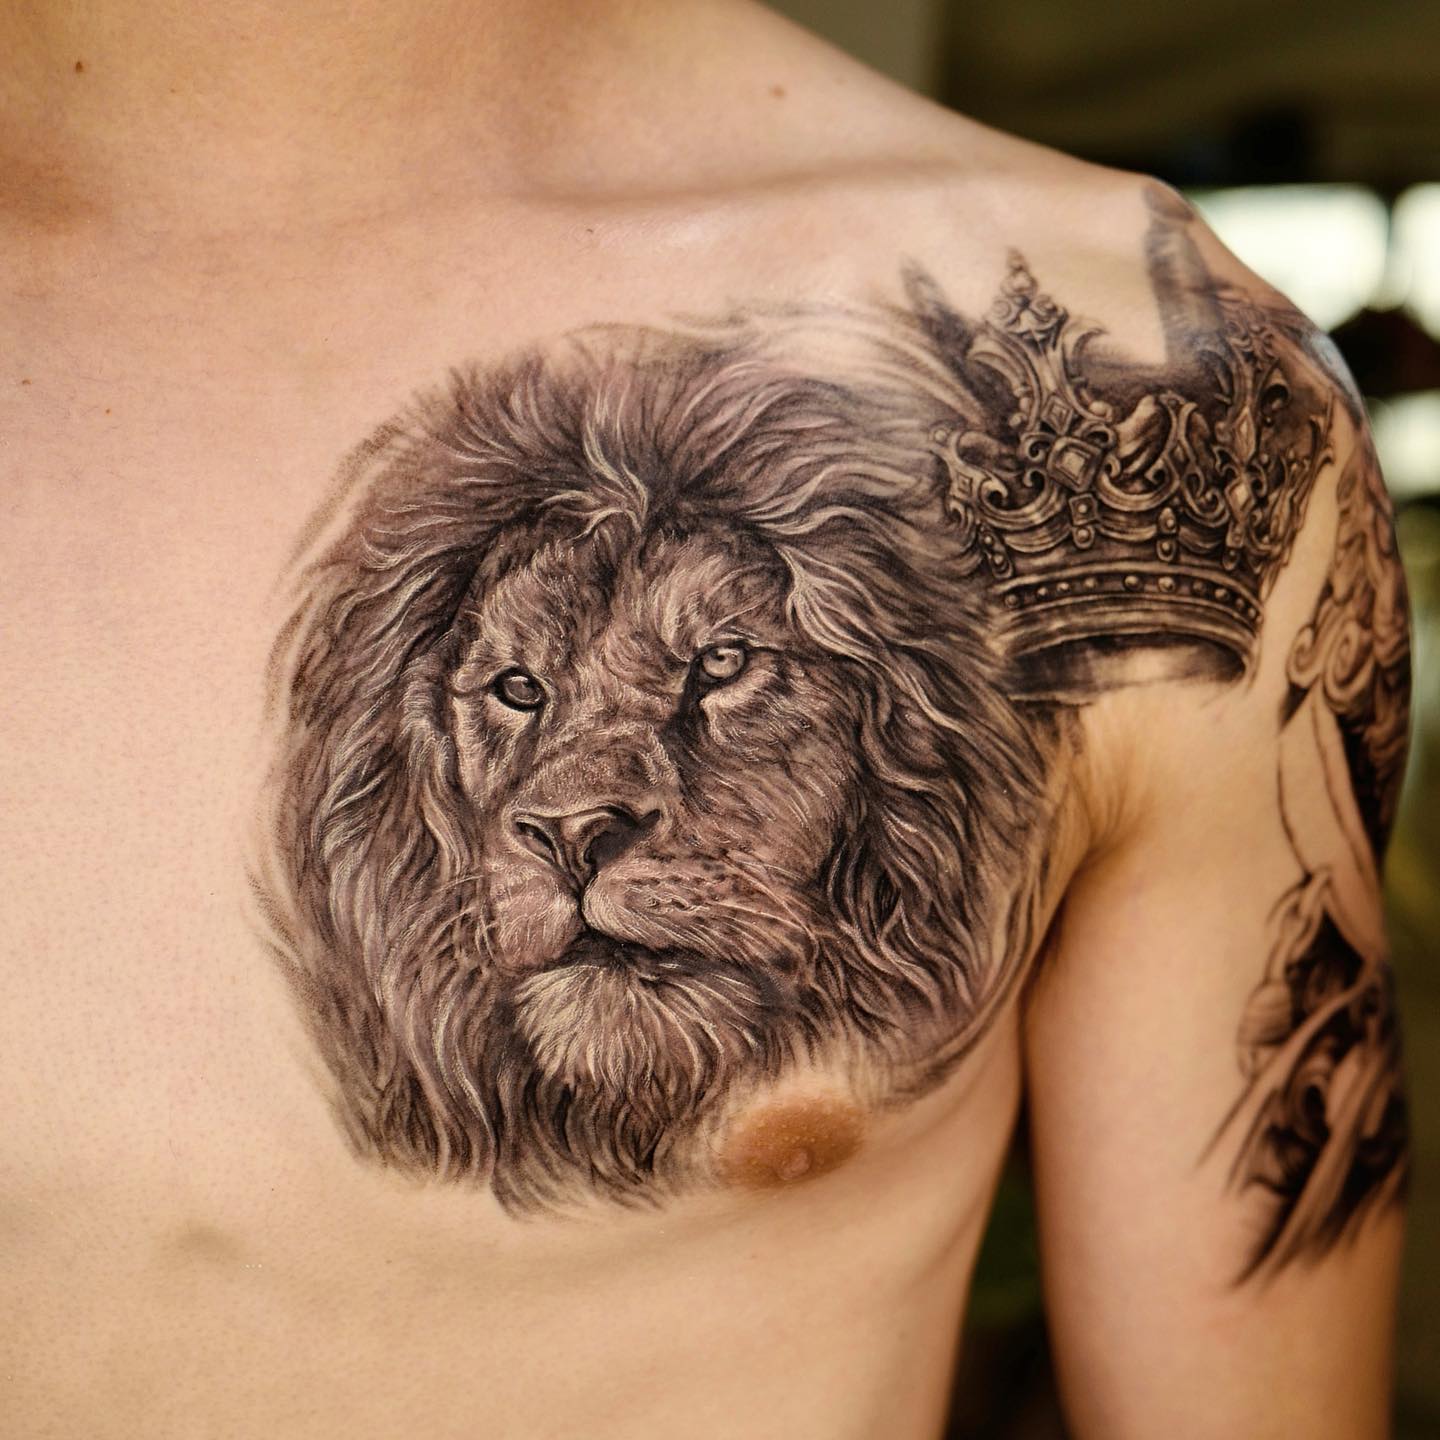 10 Best Lion Tattoos Best Ideas For Lion Tattoos  MrInkwells